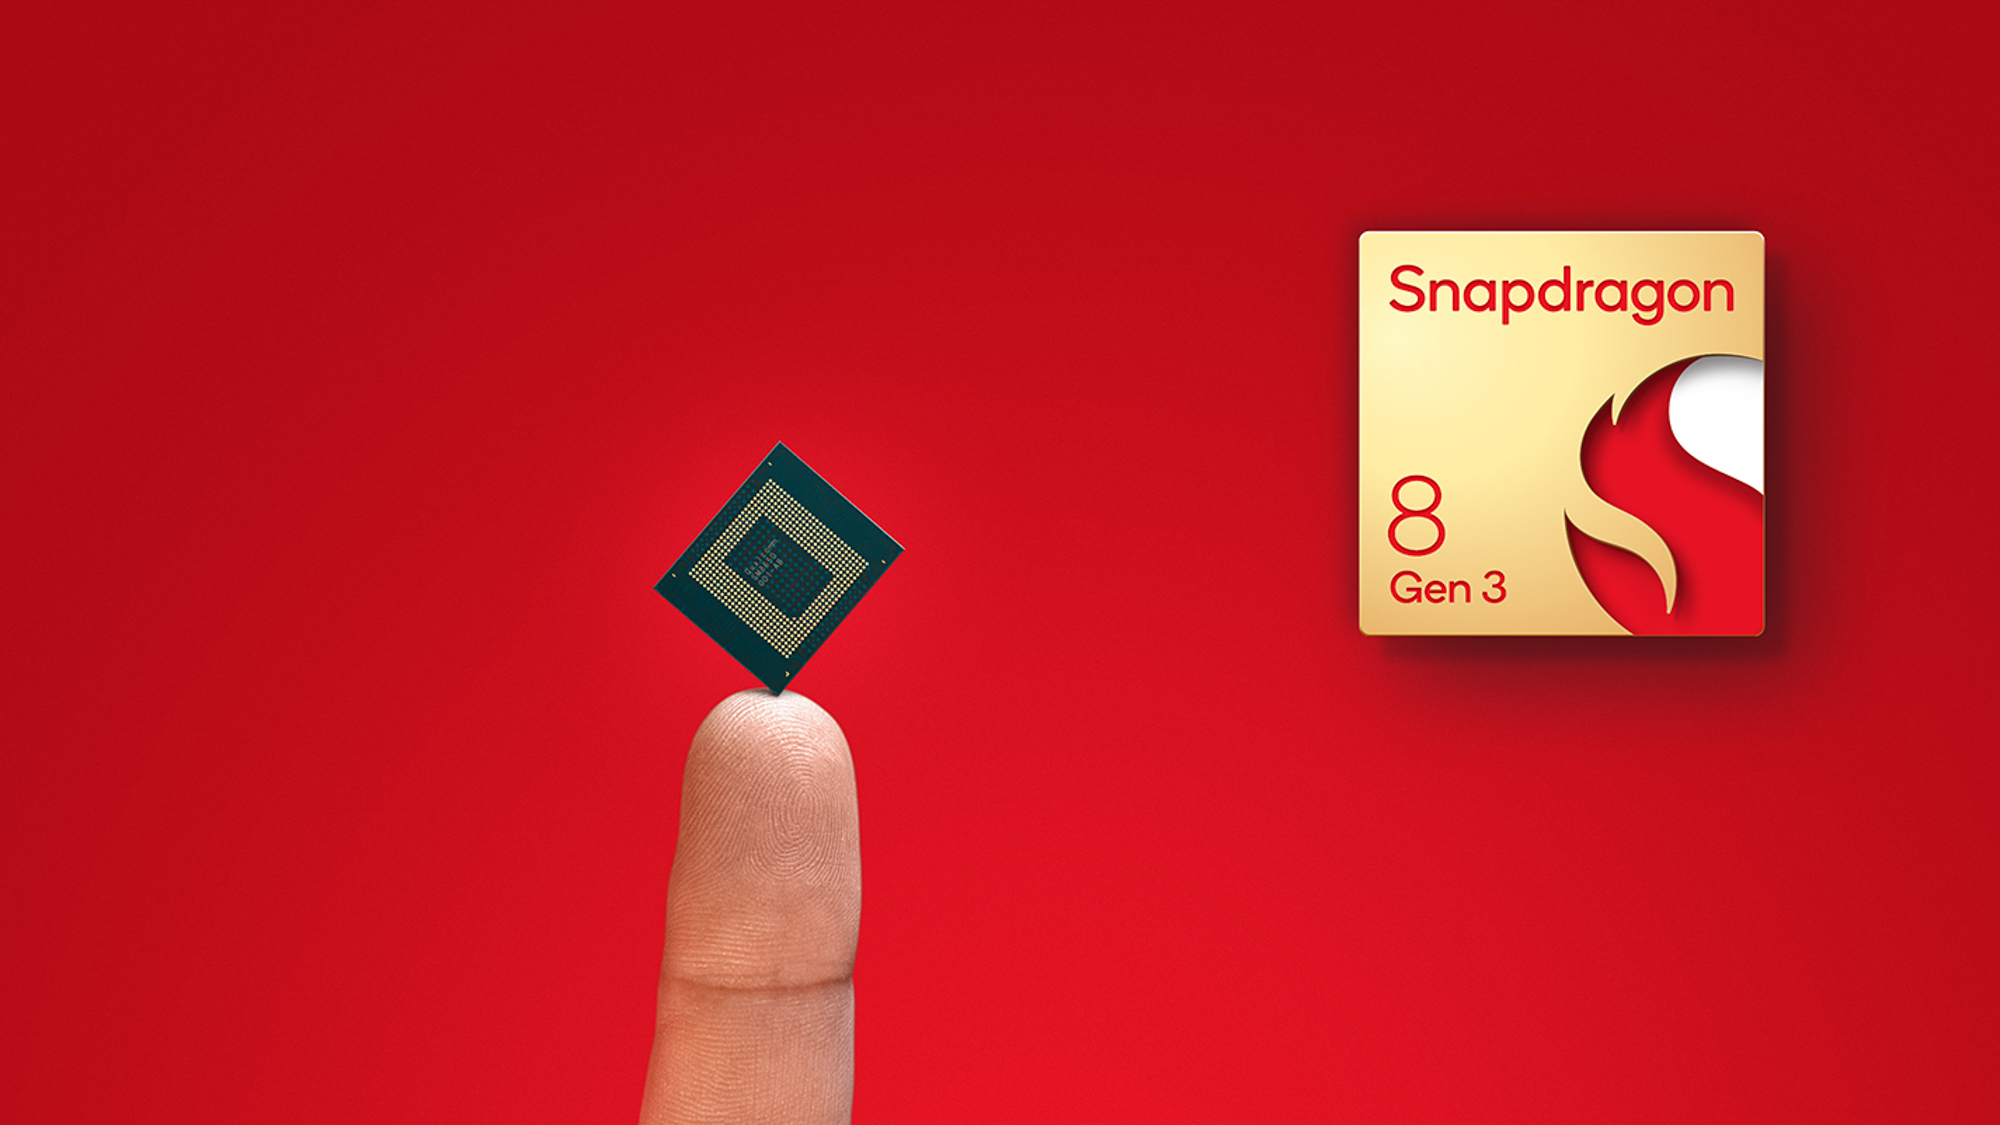 Qualcomm Snapdragon 8 Gen 3 chip